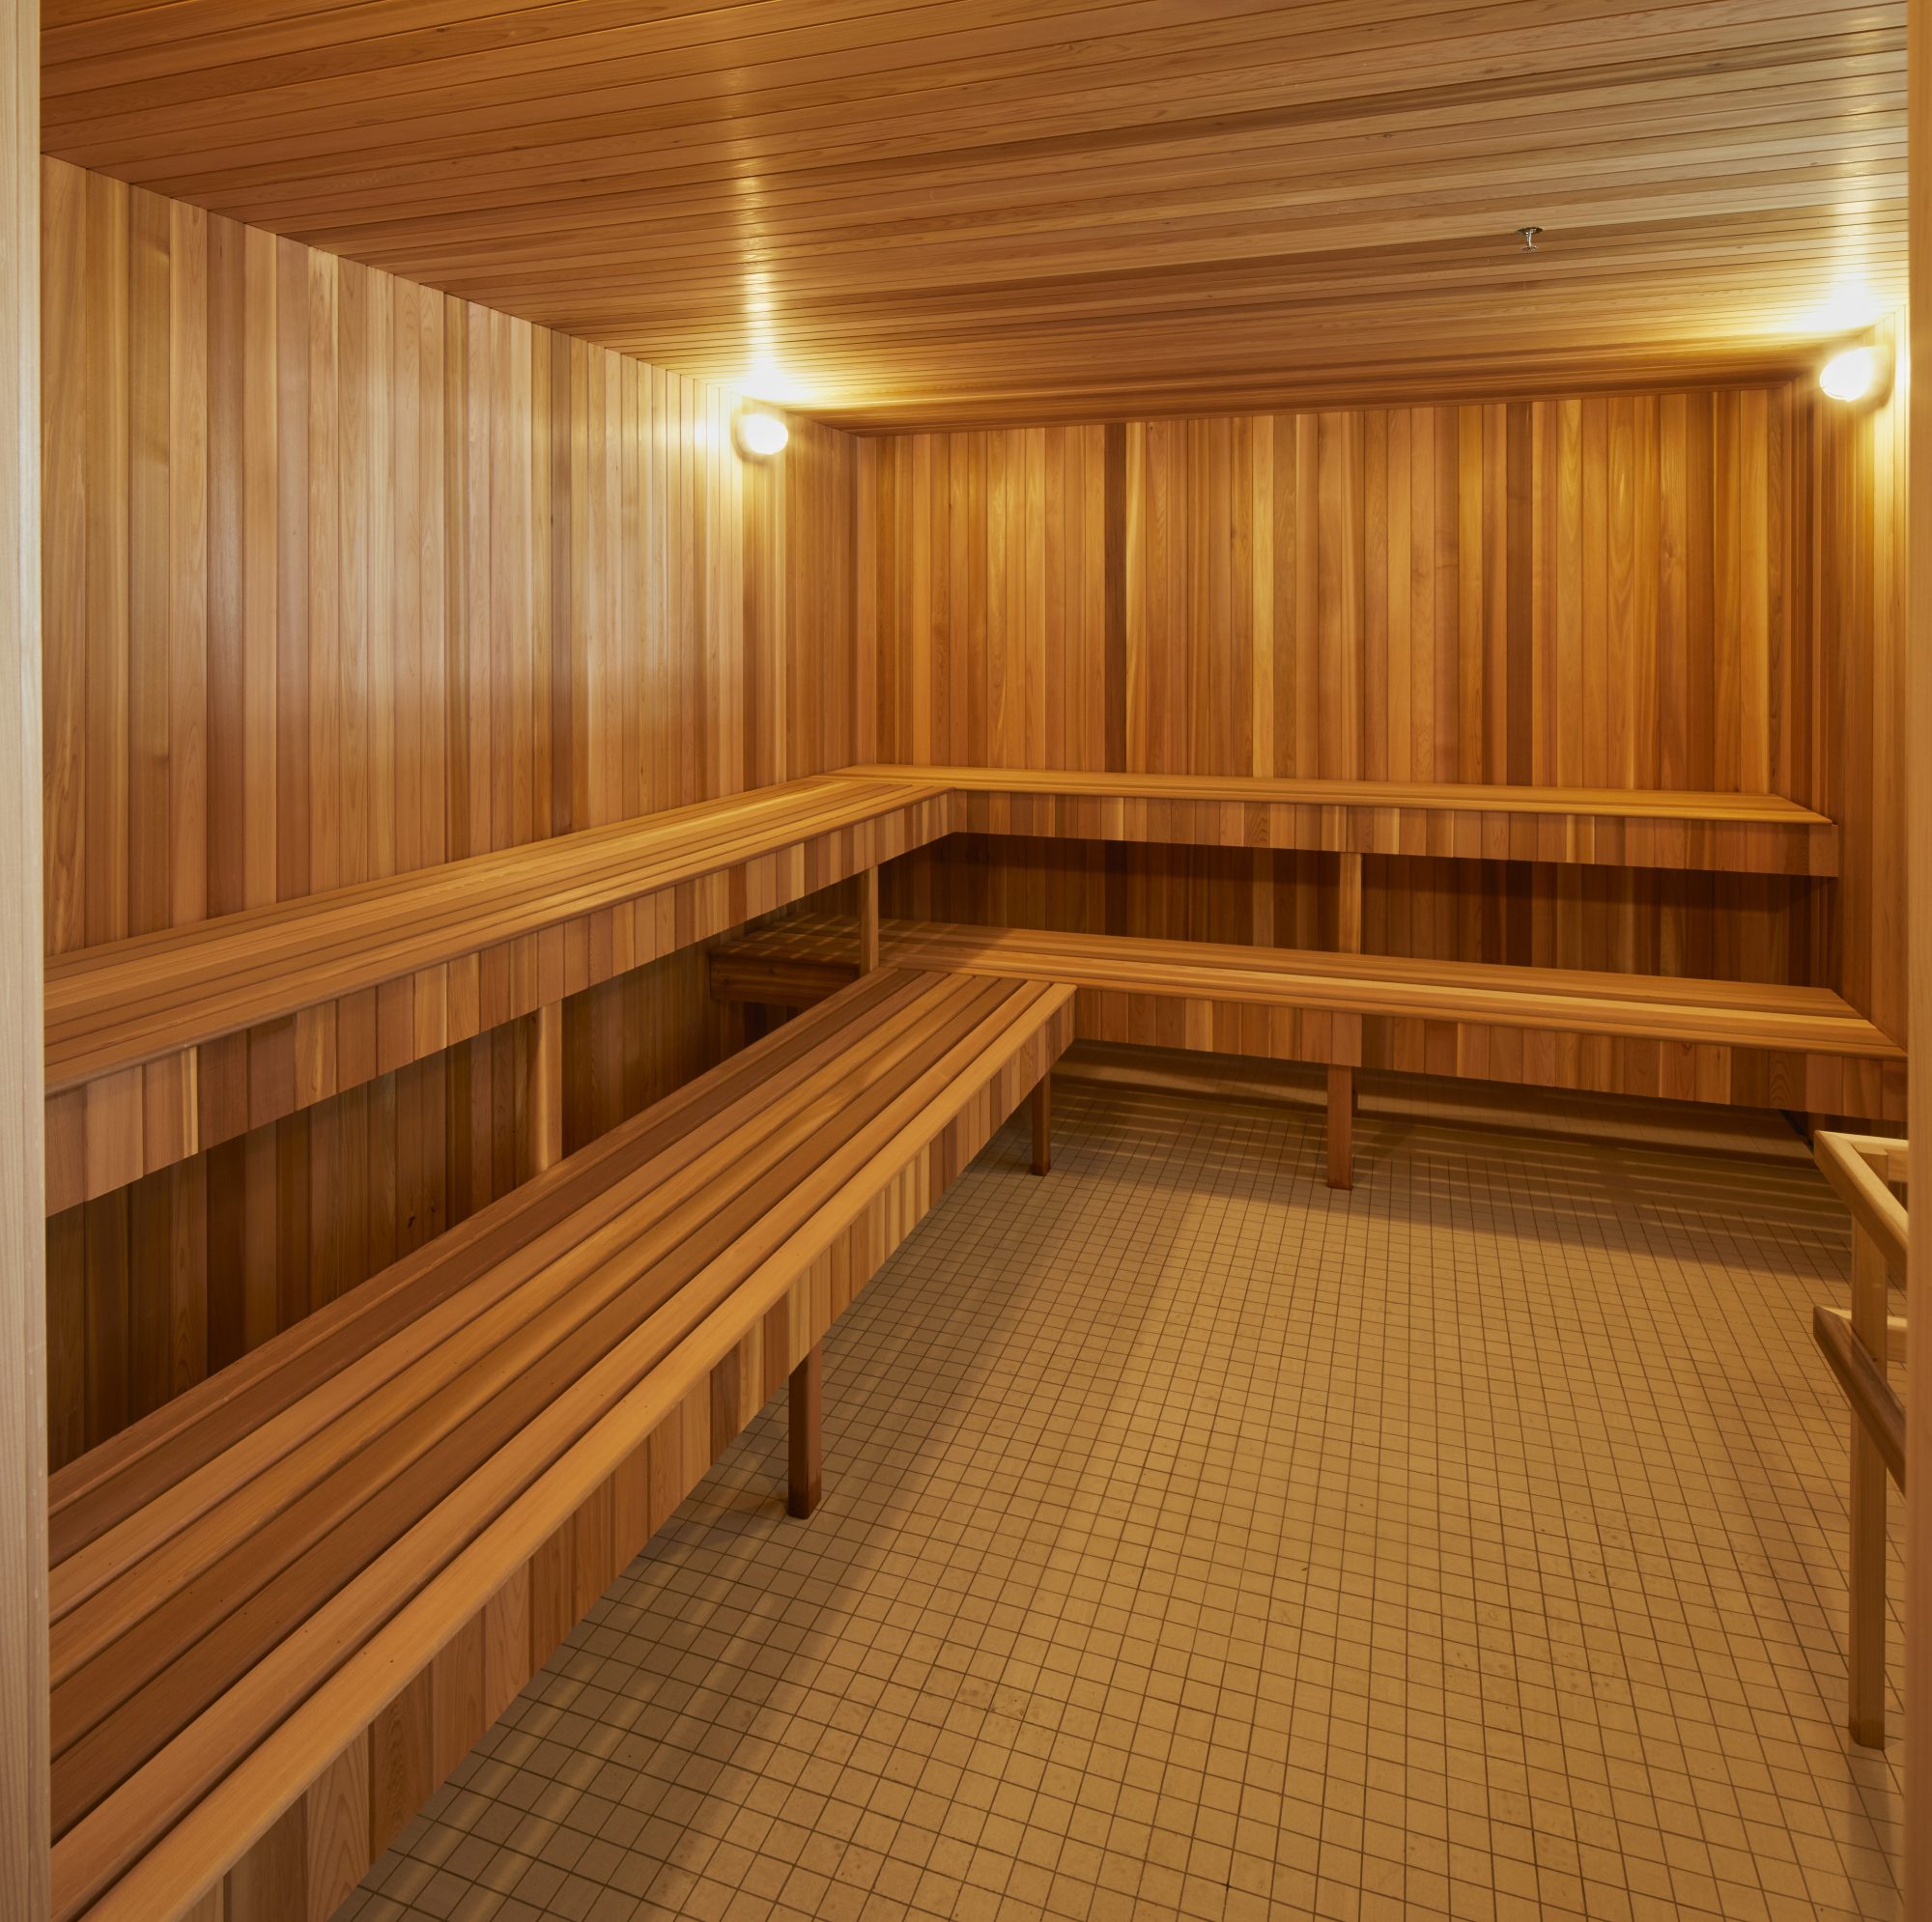 Sauna with warm wood and tile flooring.